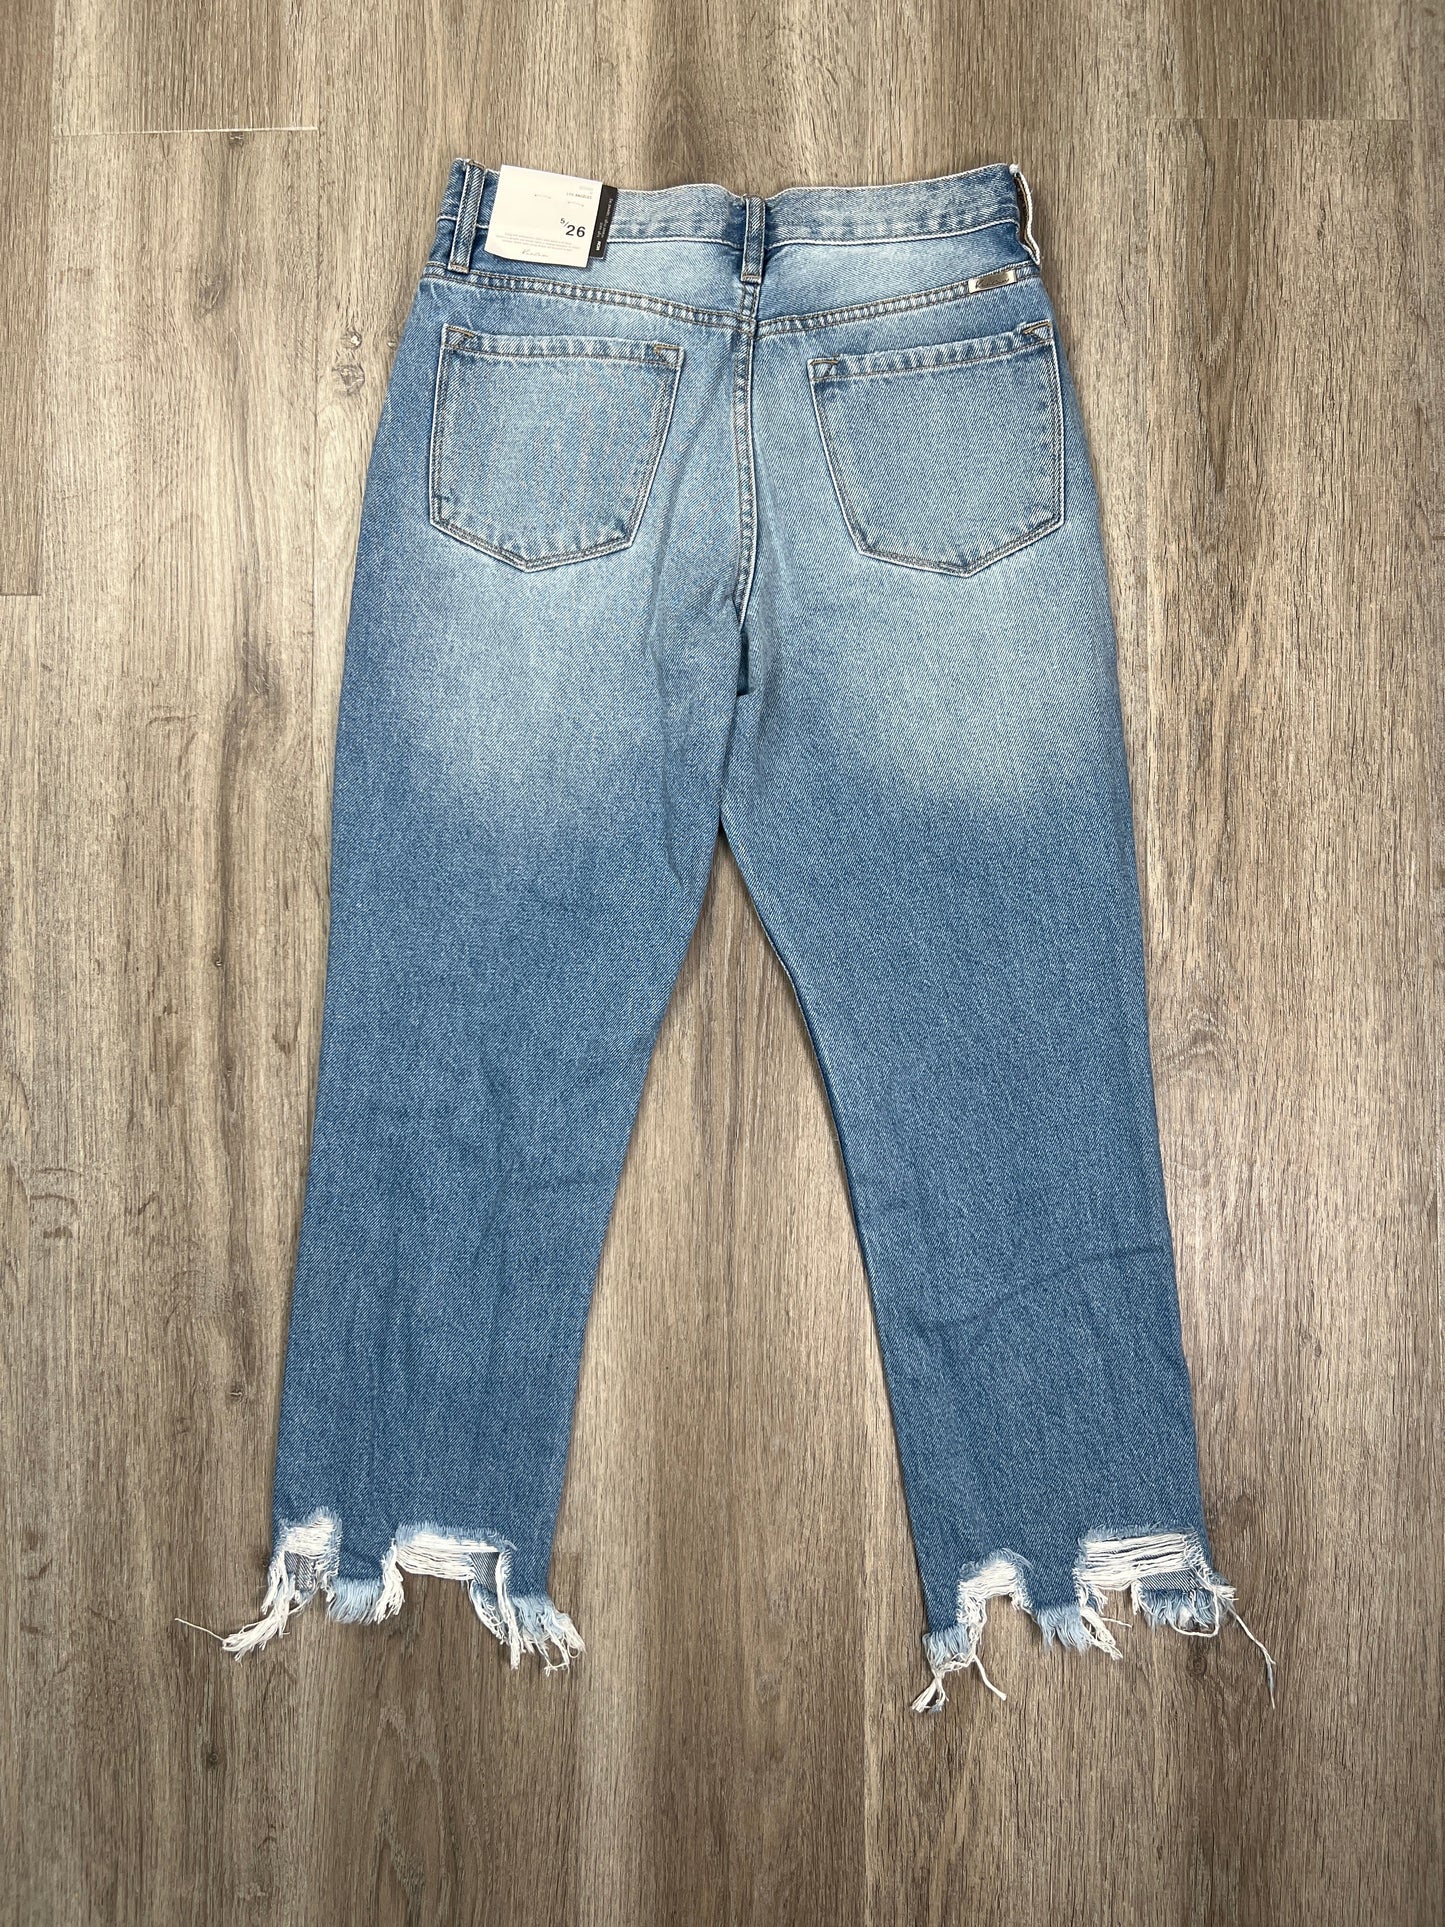 Jeans Boyfriend By Kancan  Size: 4